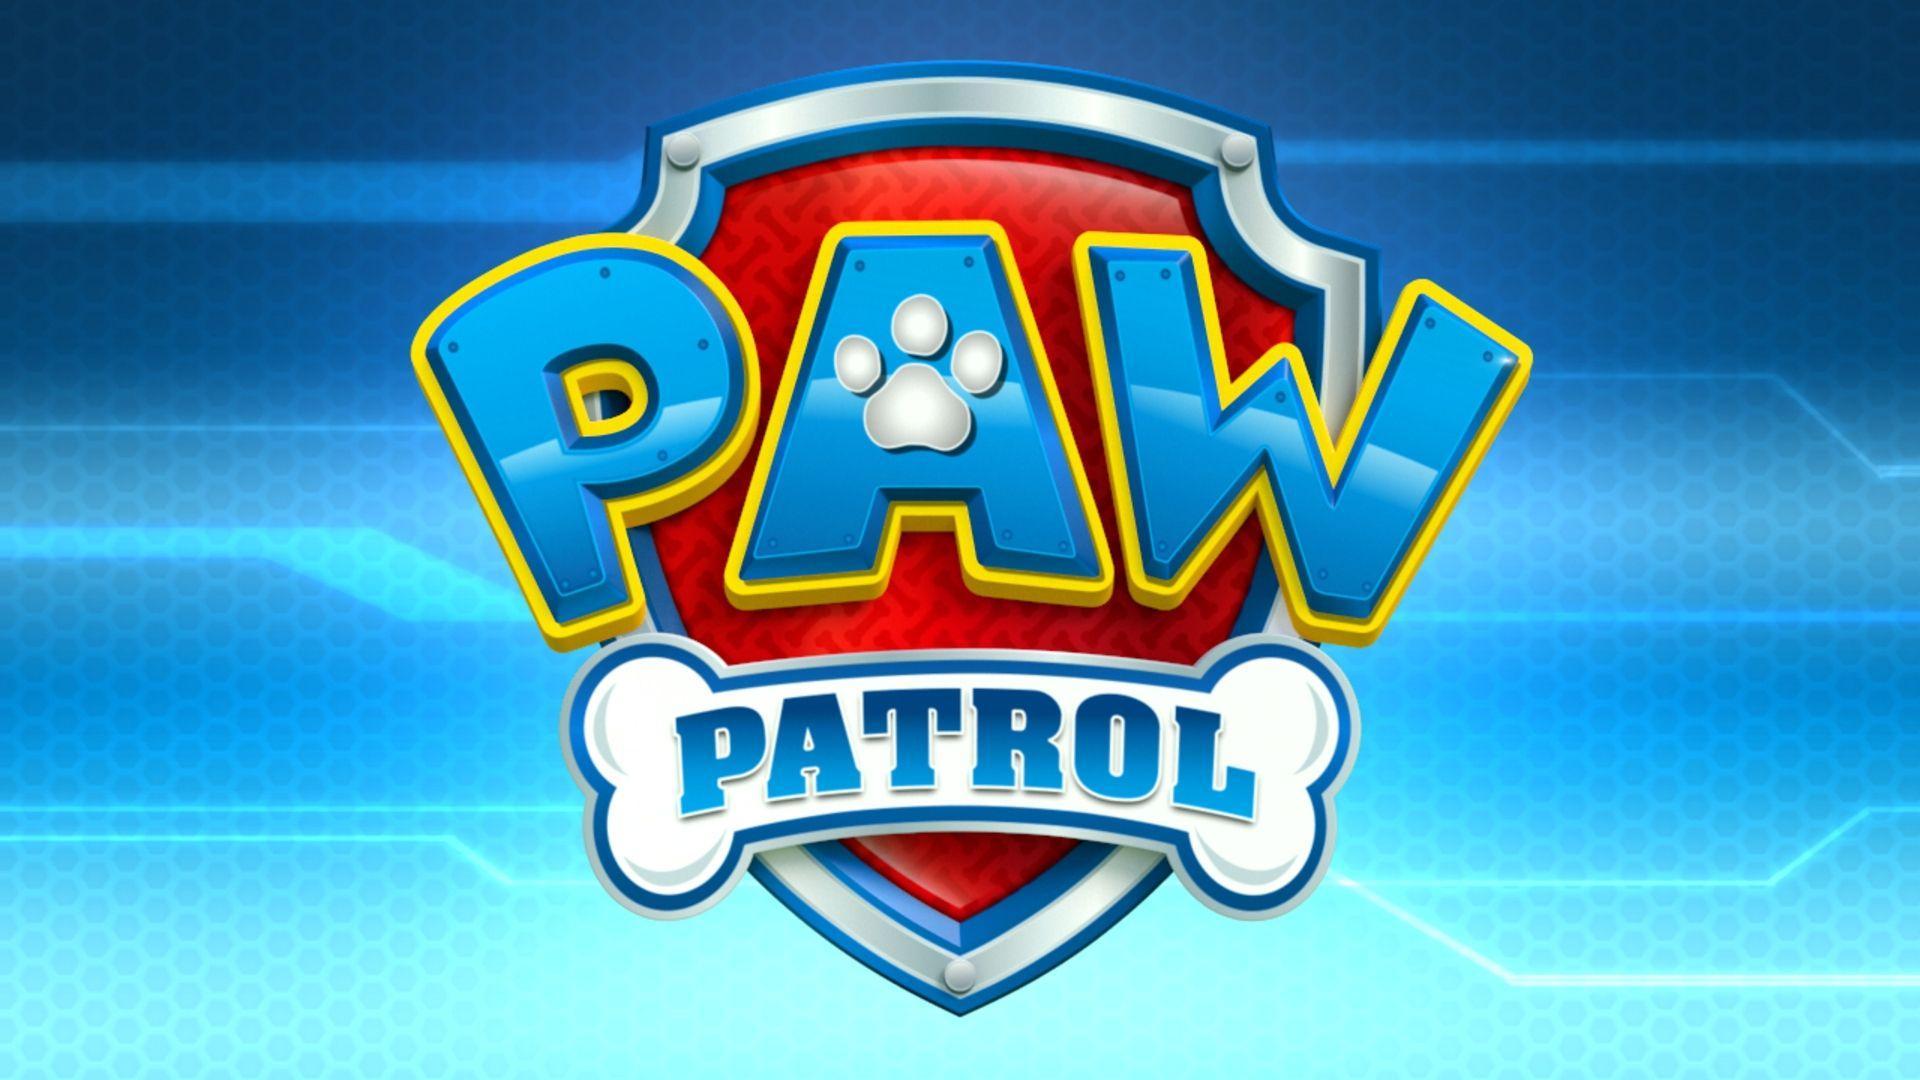 Paw Patrol Logo Wallpaper Free .wallpaperaccess.com